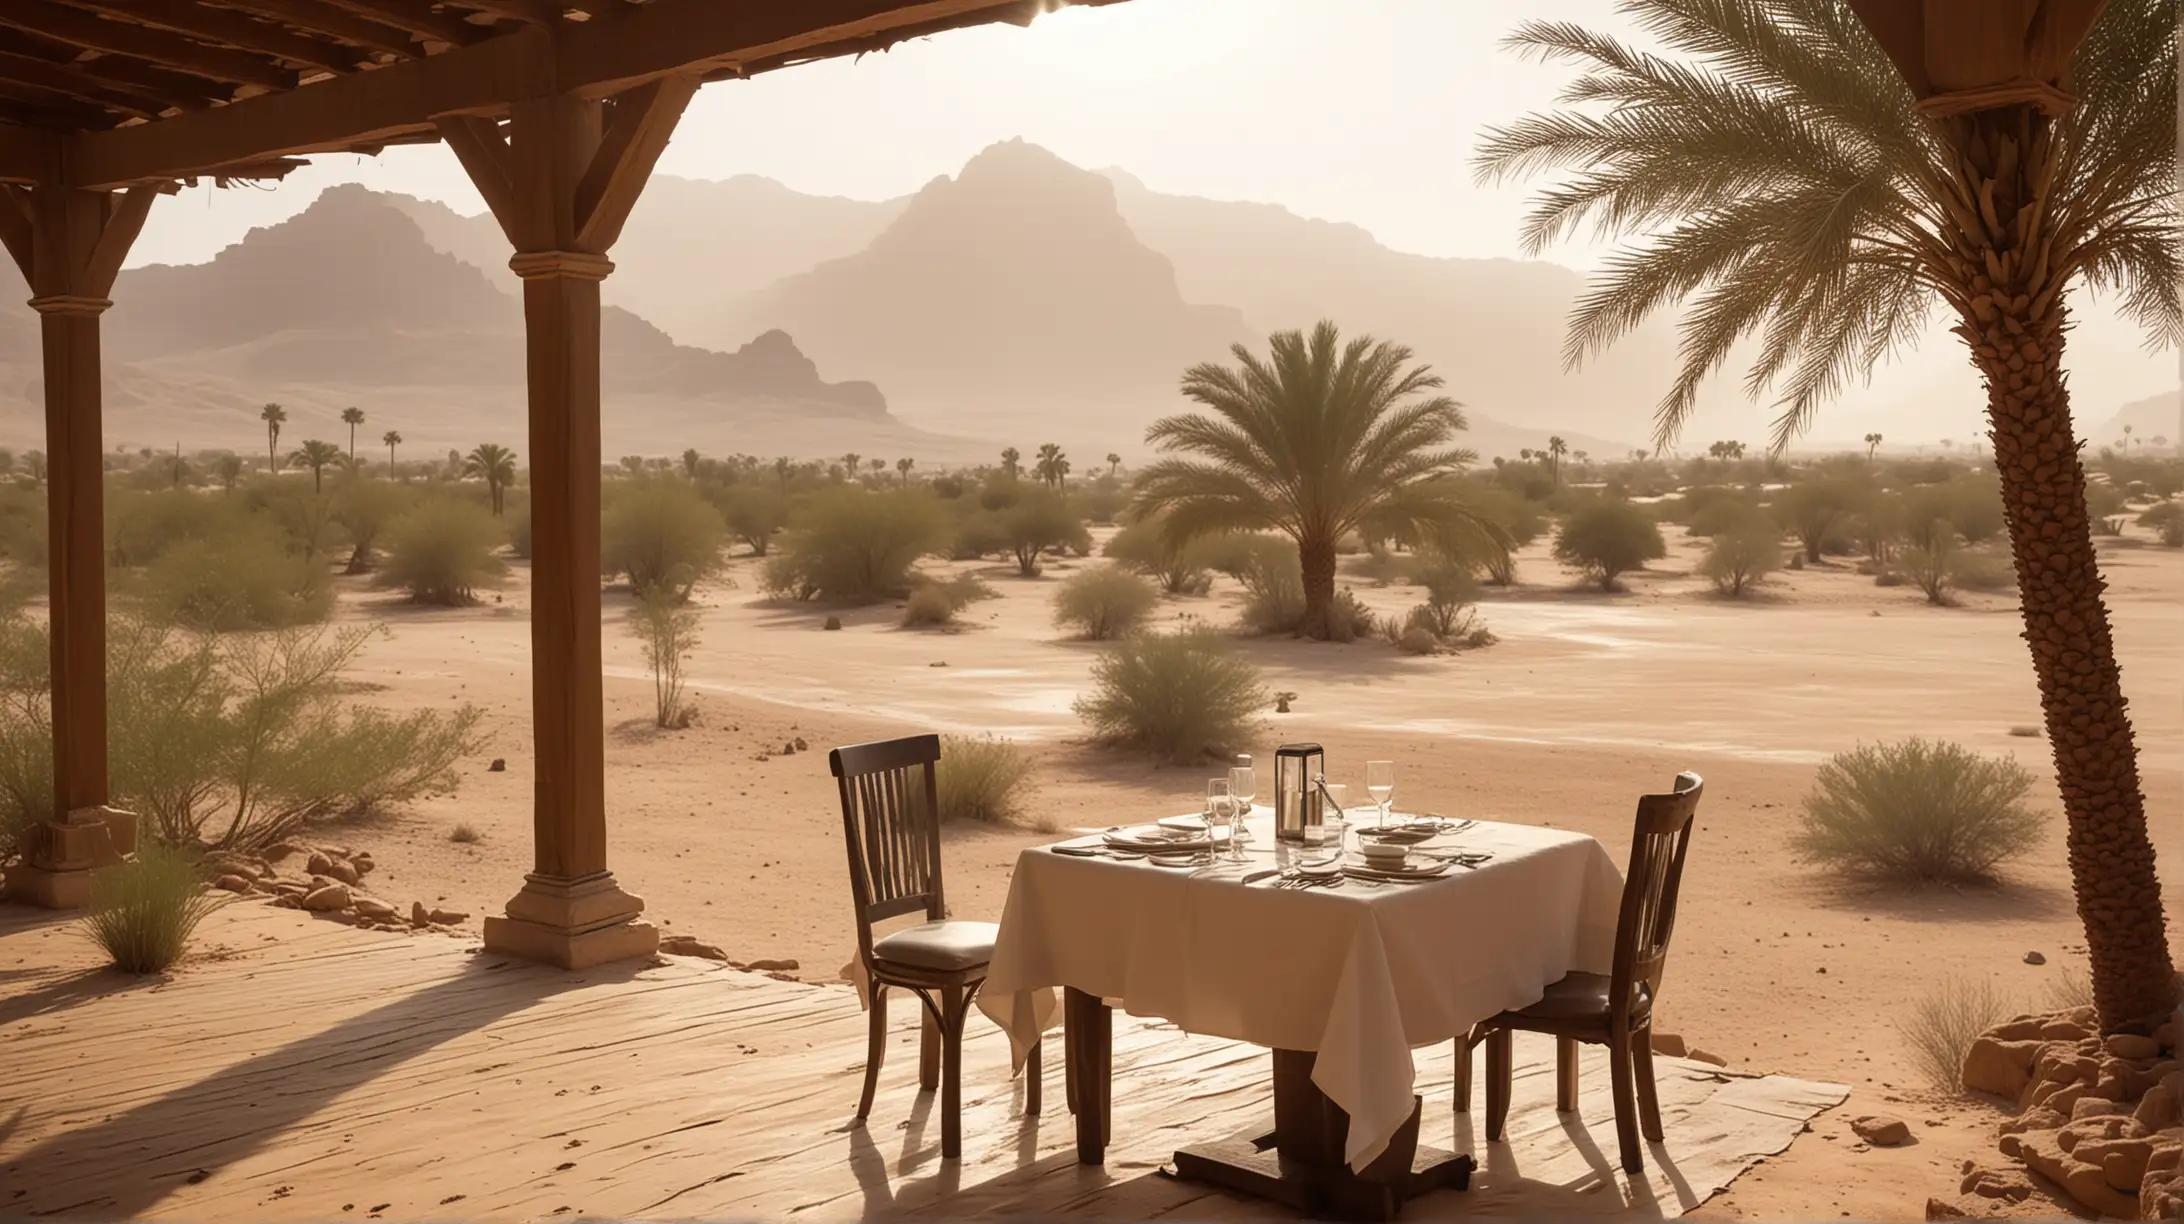 Desert Oasis Restaurant Mystique Amidst Sandstorms